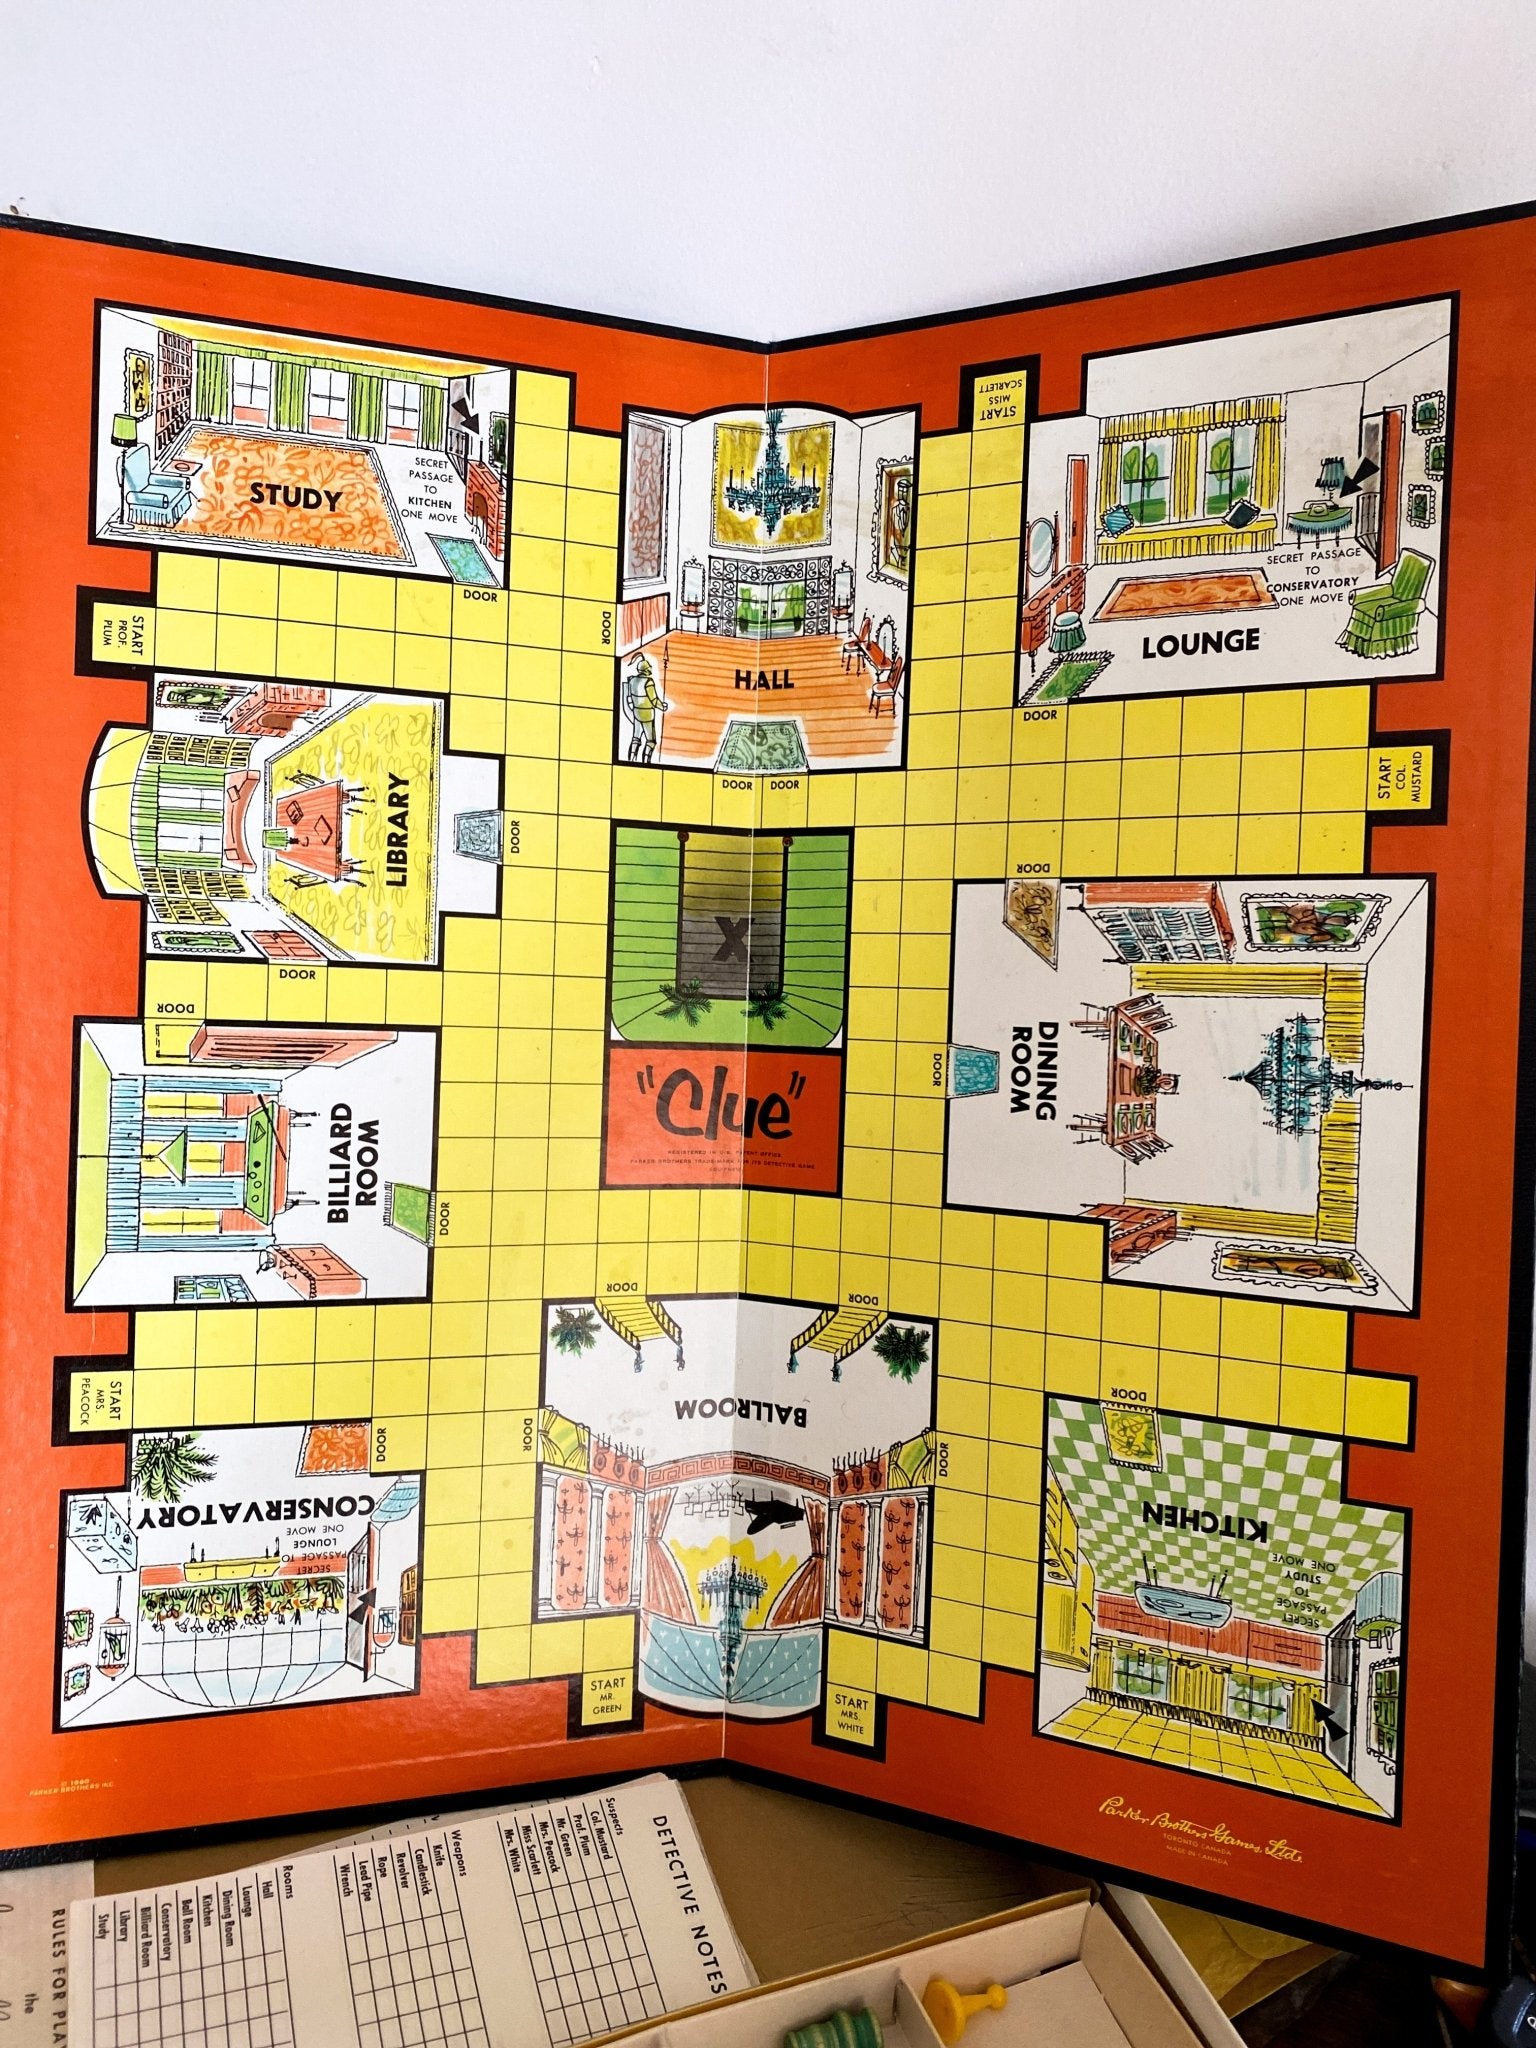 Original Clue Vintage Board Game - Perth Market